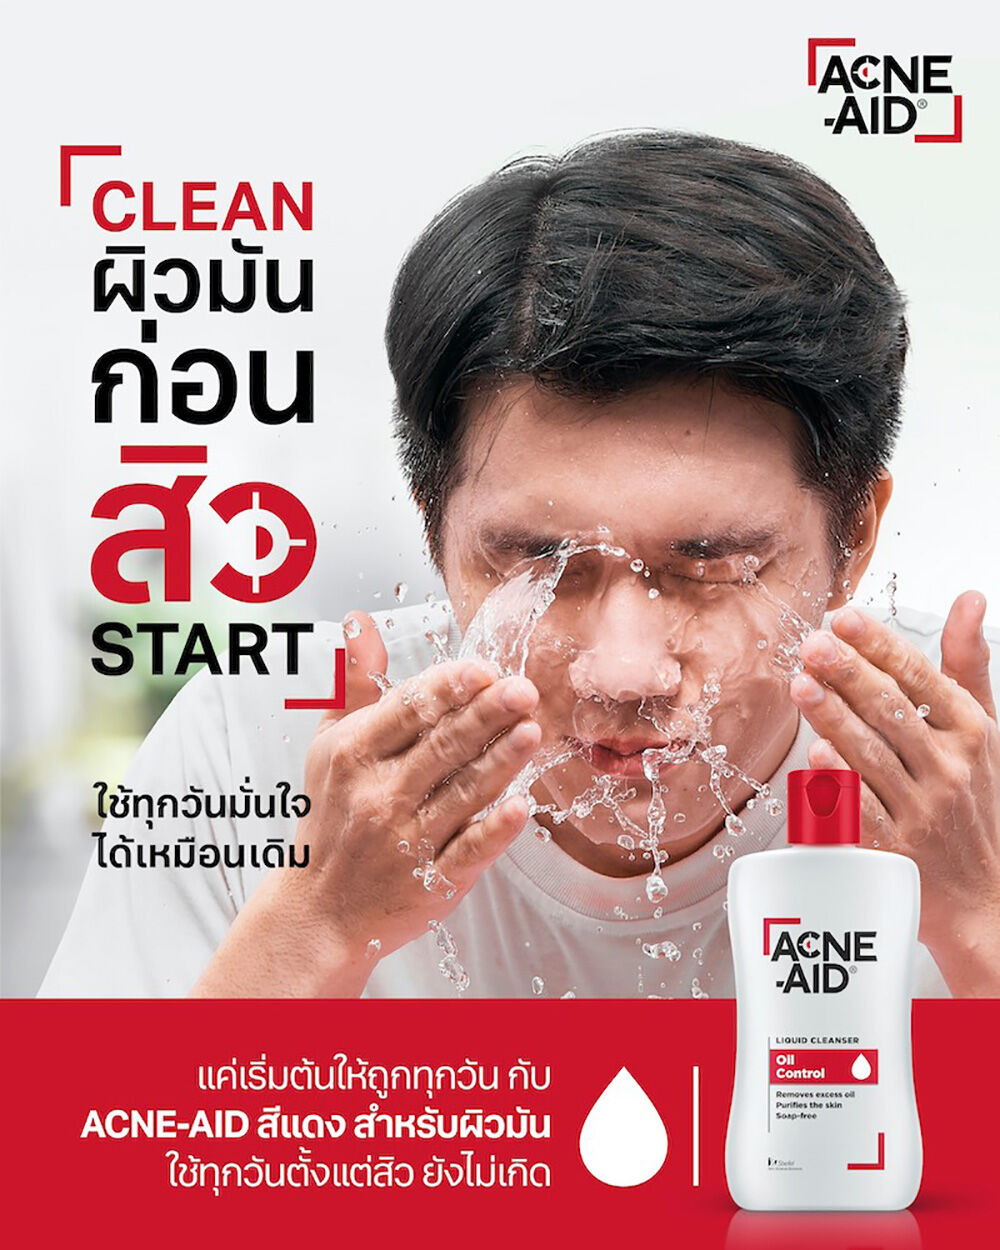 Acne-Aid Liquid Cleanser สีแดง สูตรผิวมัน